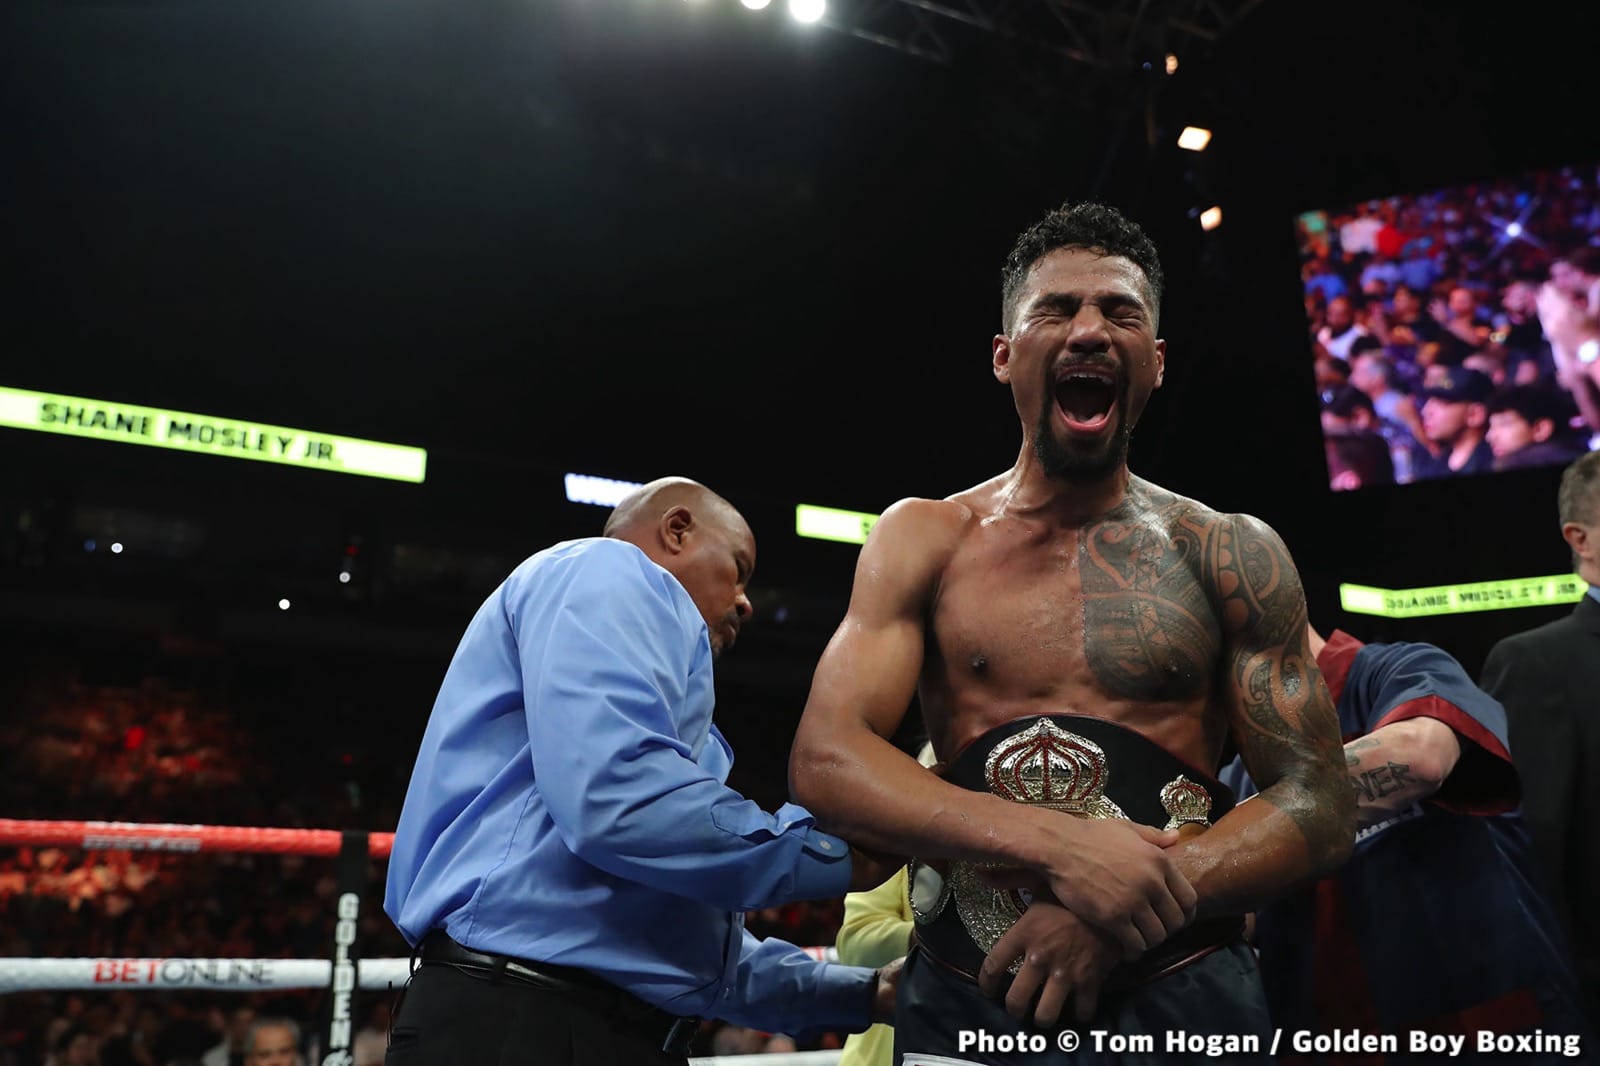 Image: Boxing Results: Shane Mosley Jr upsets Gabe Rosado, wants world title shot